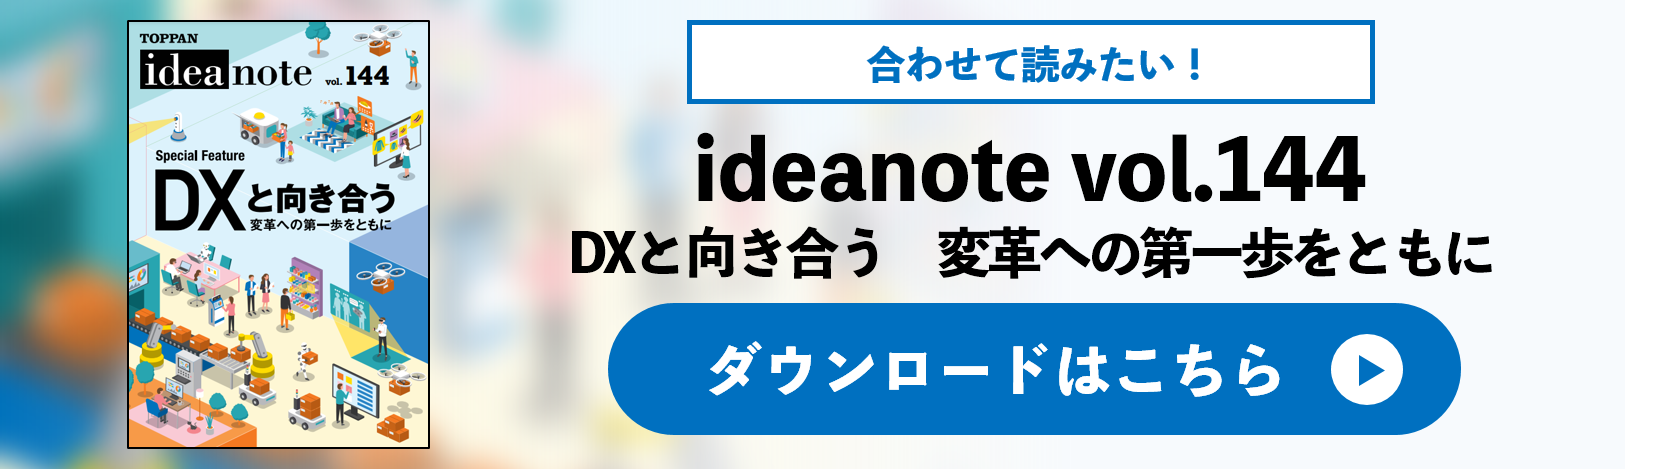 ideanote vol.144 DXと向き合う　変革の第一歩をともに